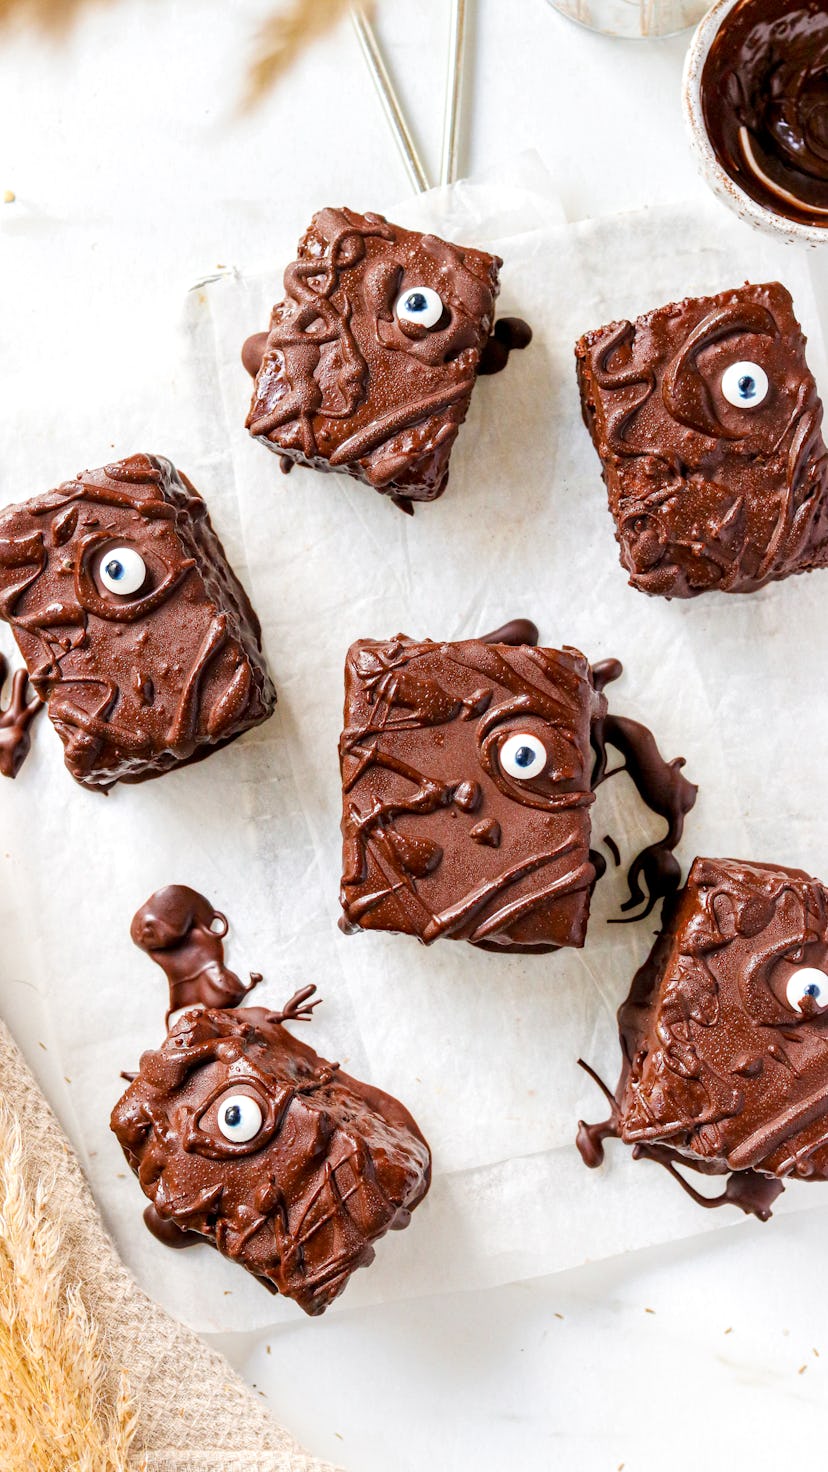 Halloween Chocolate Brownies with spooky eyes
